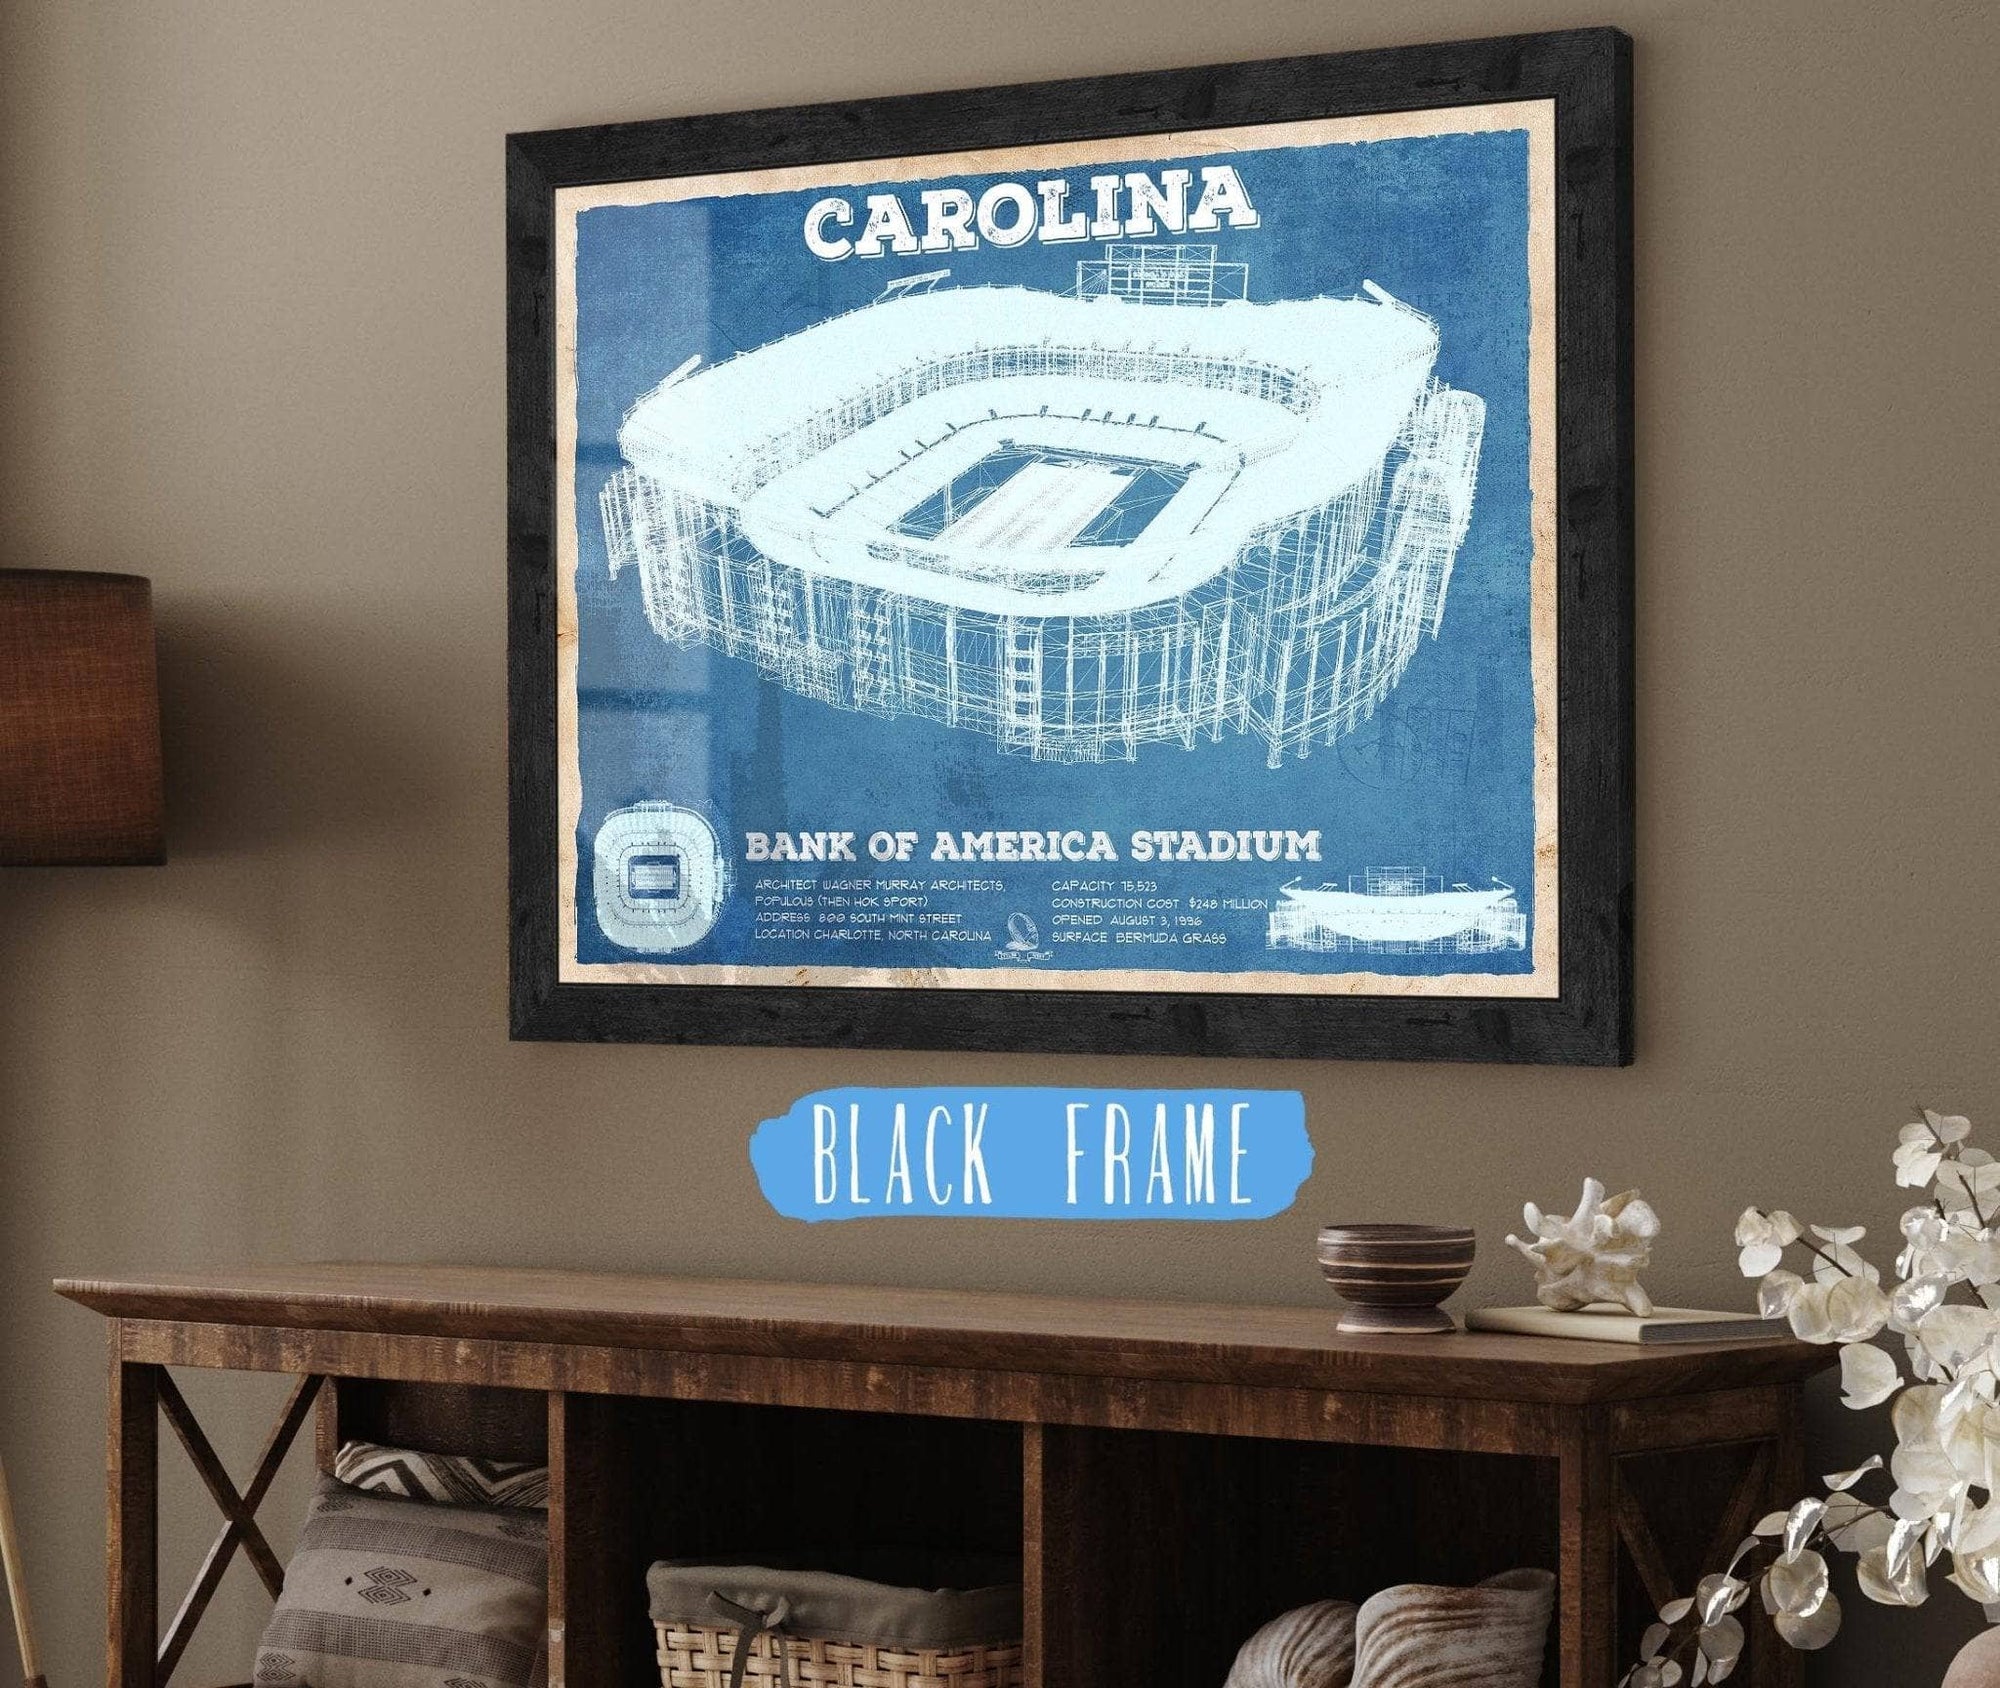 Cutler West Pro Football Collection 14" x 11" / Black Frame Carolina Panthers Stadium Art - Bank of America - Vintage Football Print 649455789-TOP